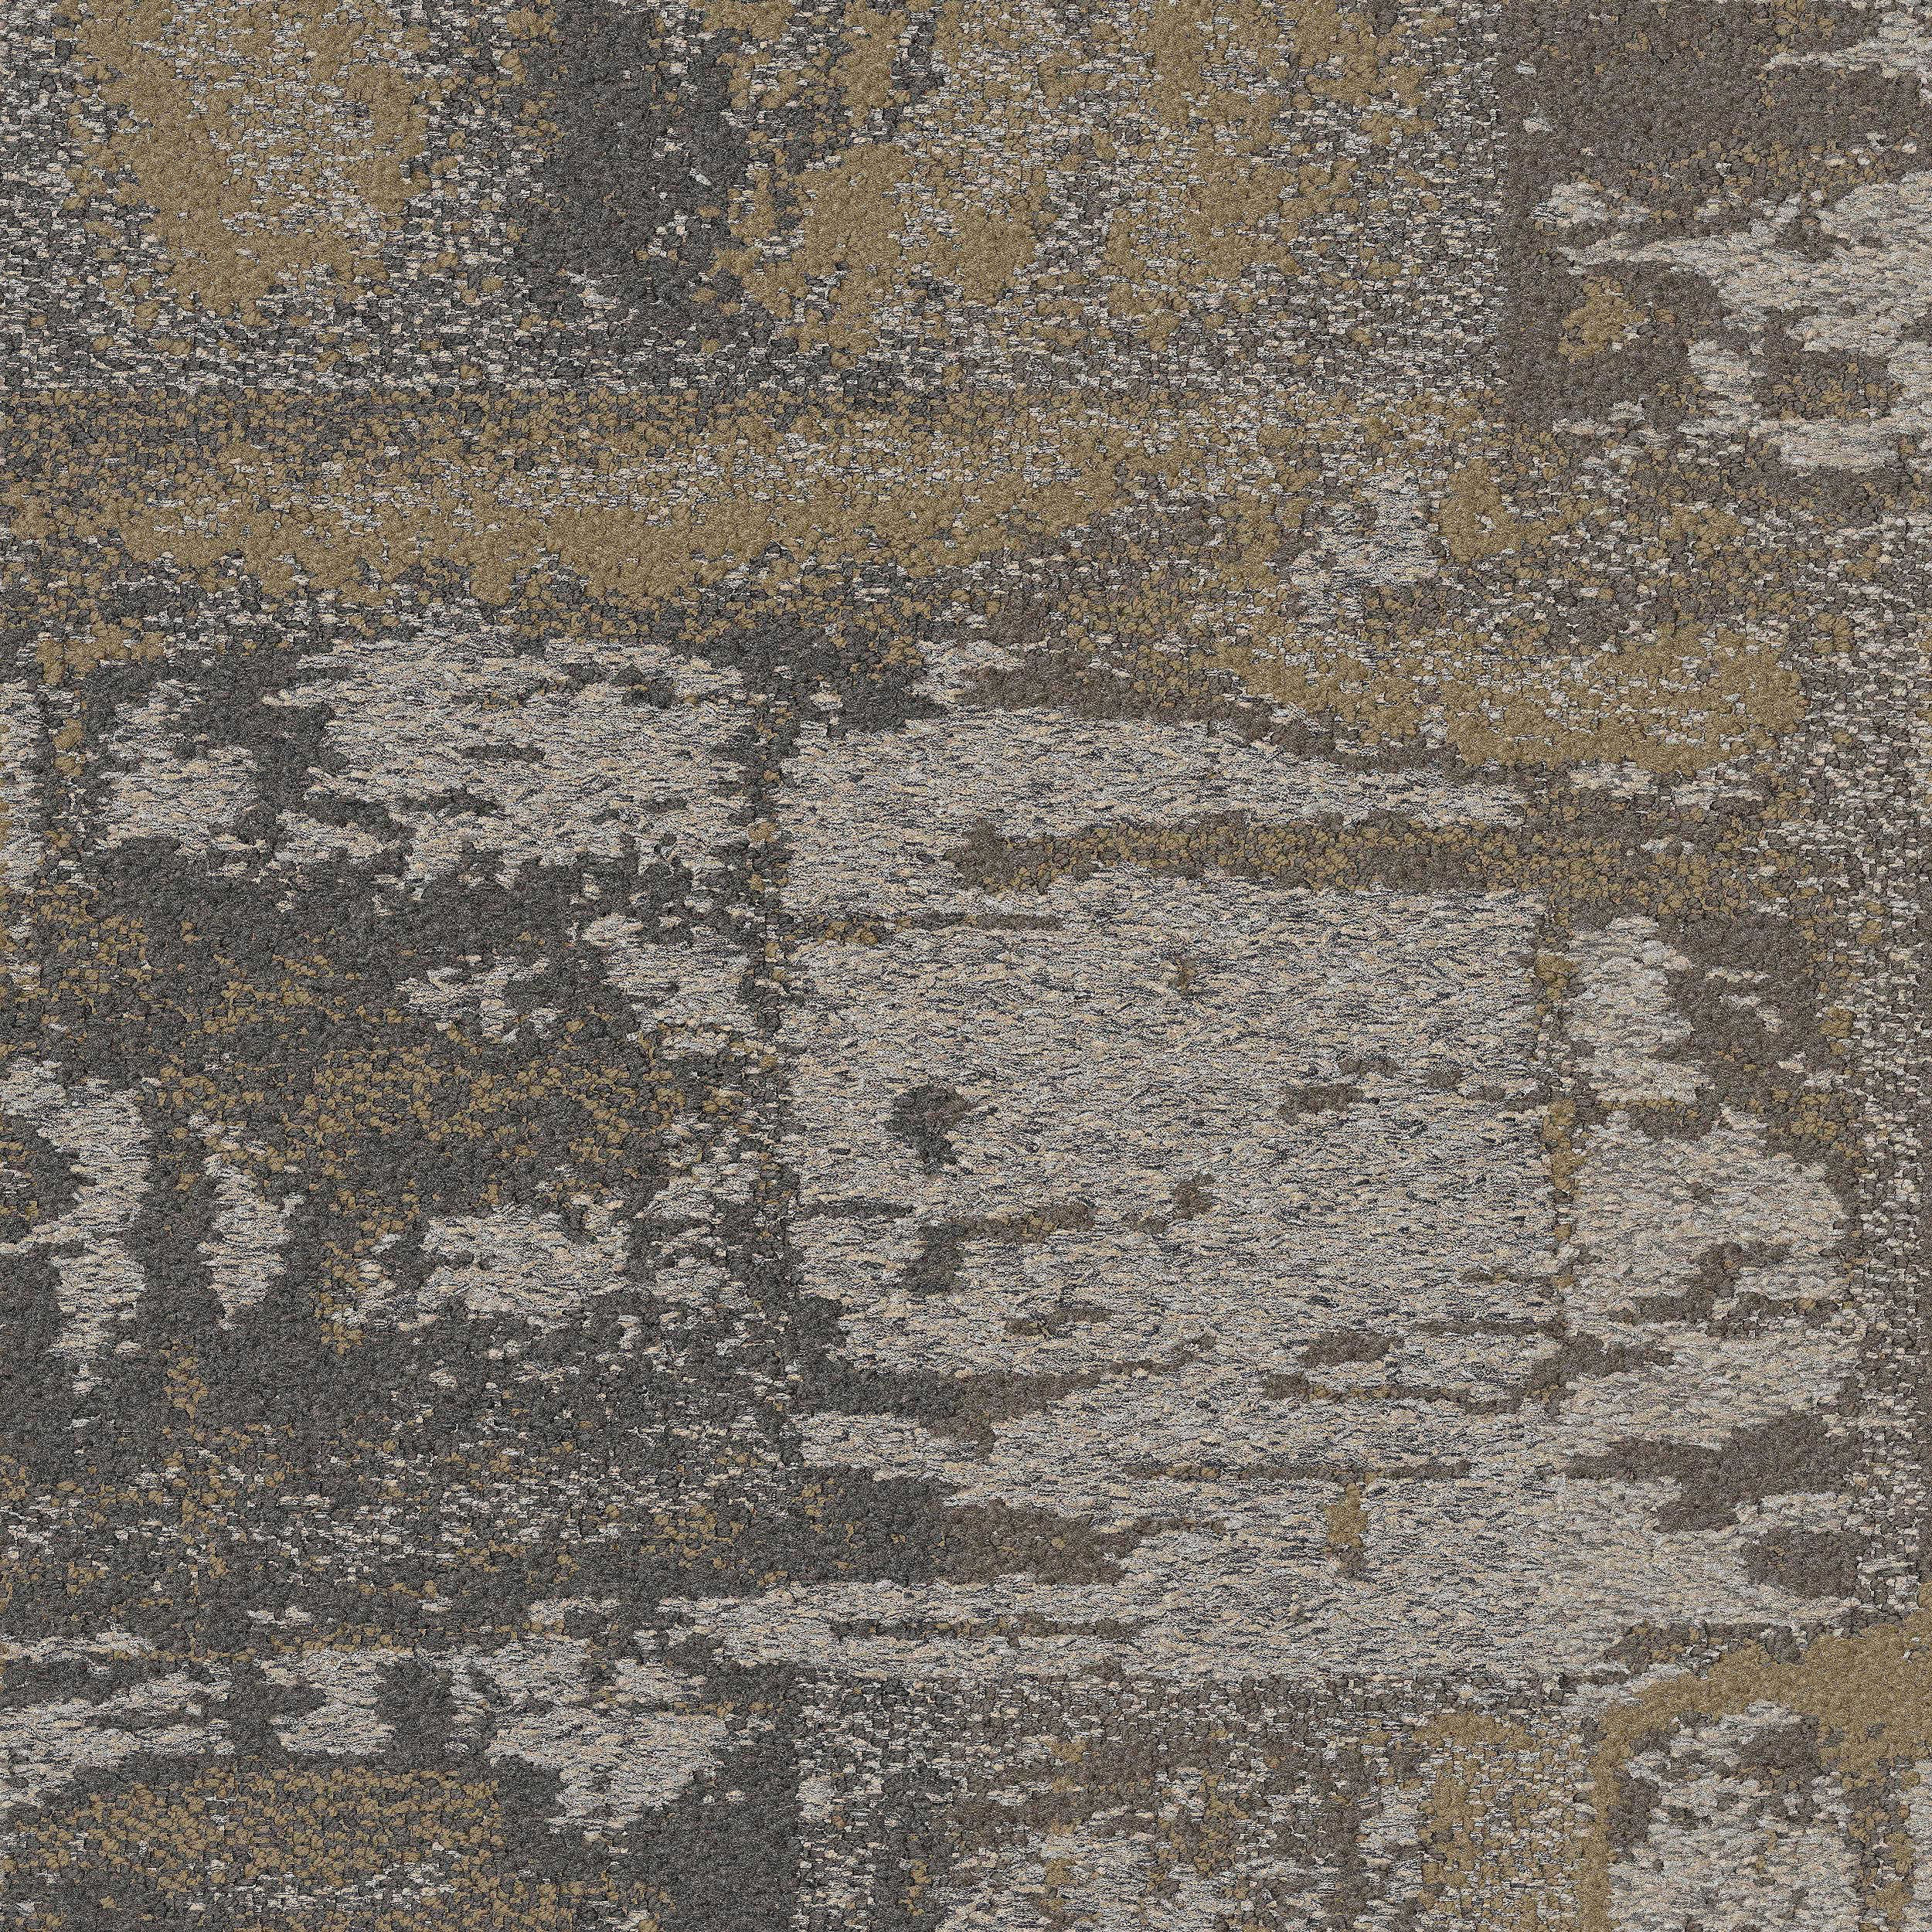 A Peeling Carpet Tile In Patina imagen número 7